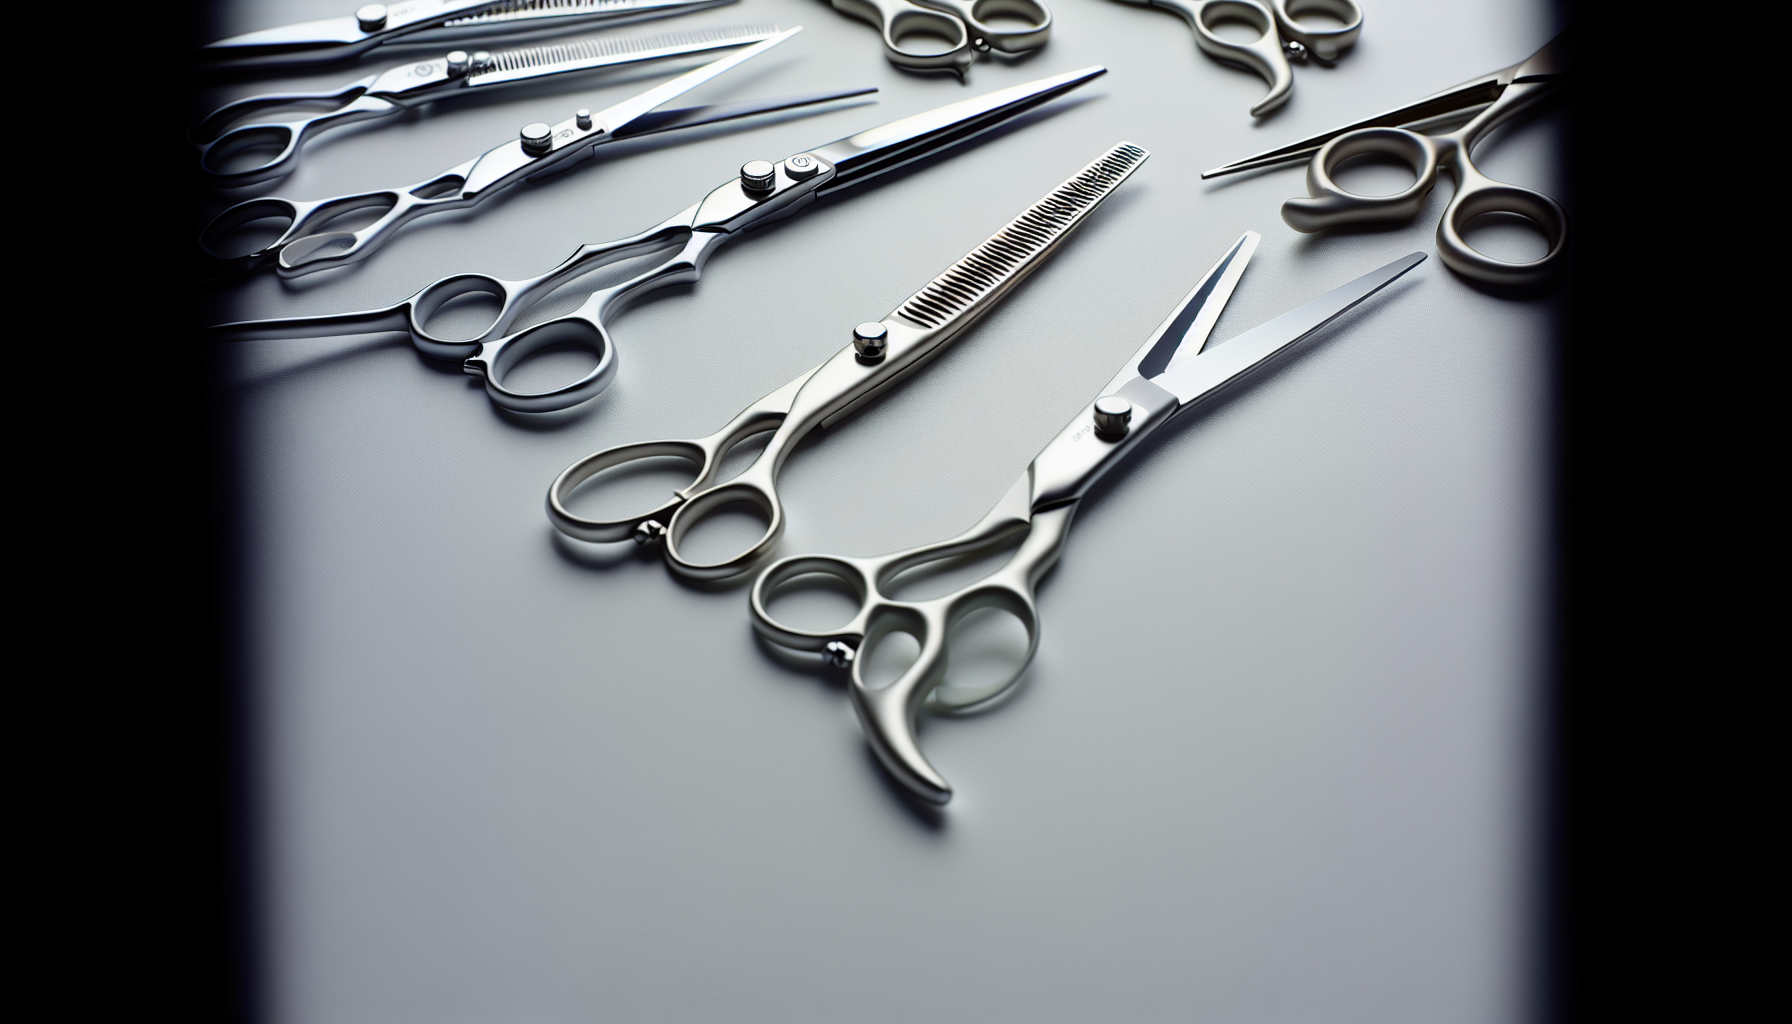 Variety of dog grooming scissors